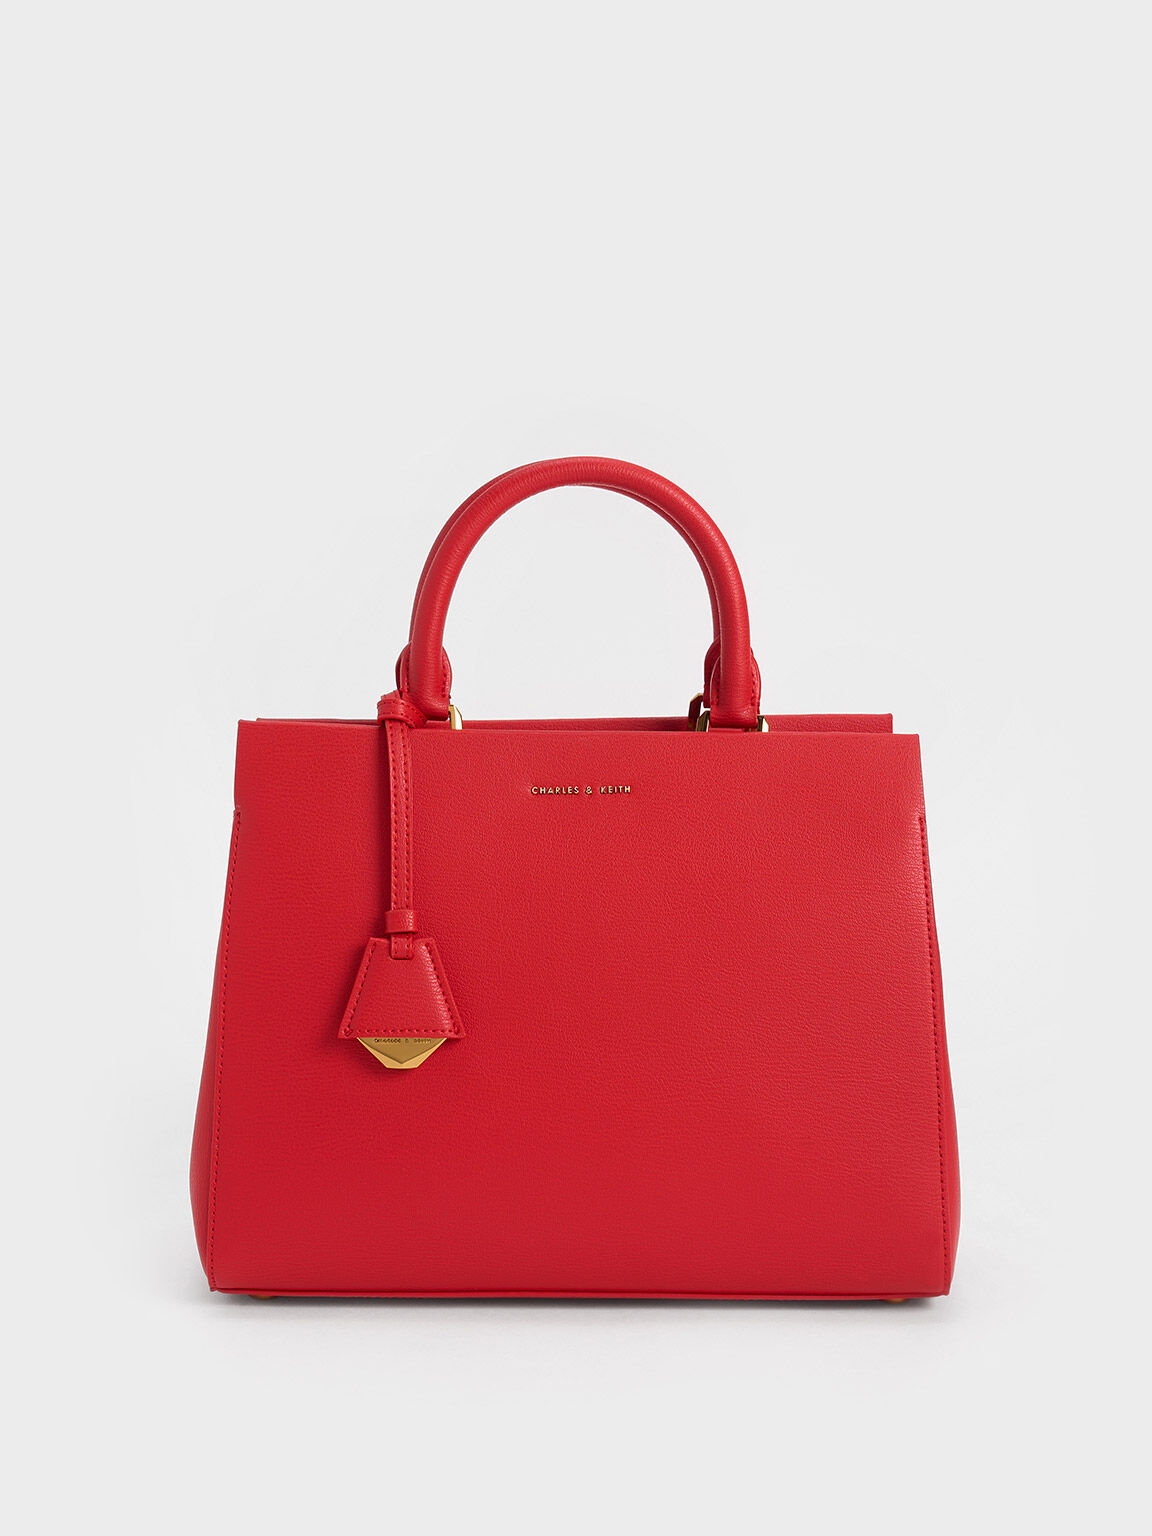 Classic Structured Handbag, Red, hi-res